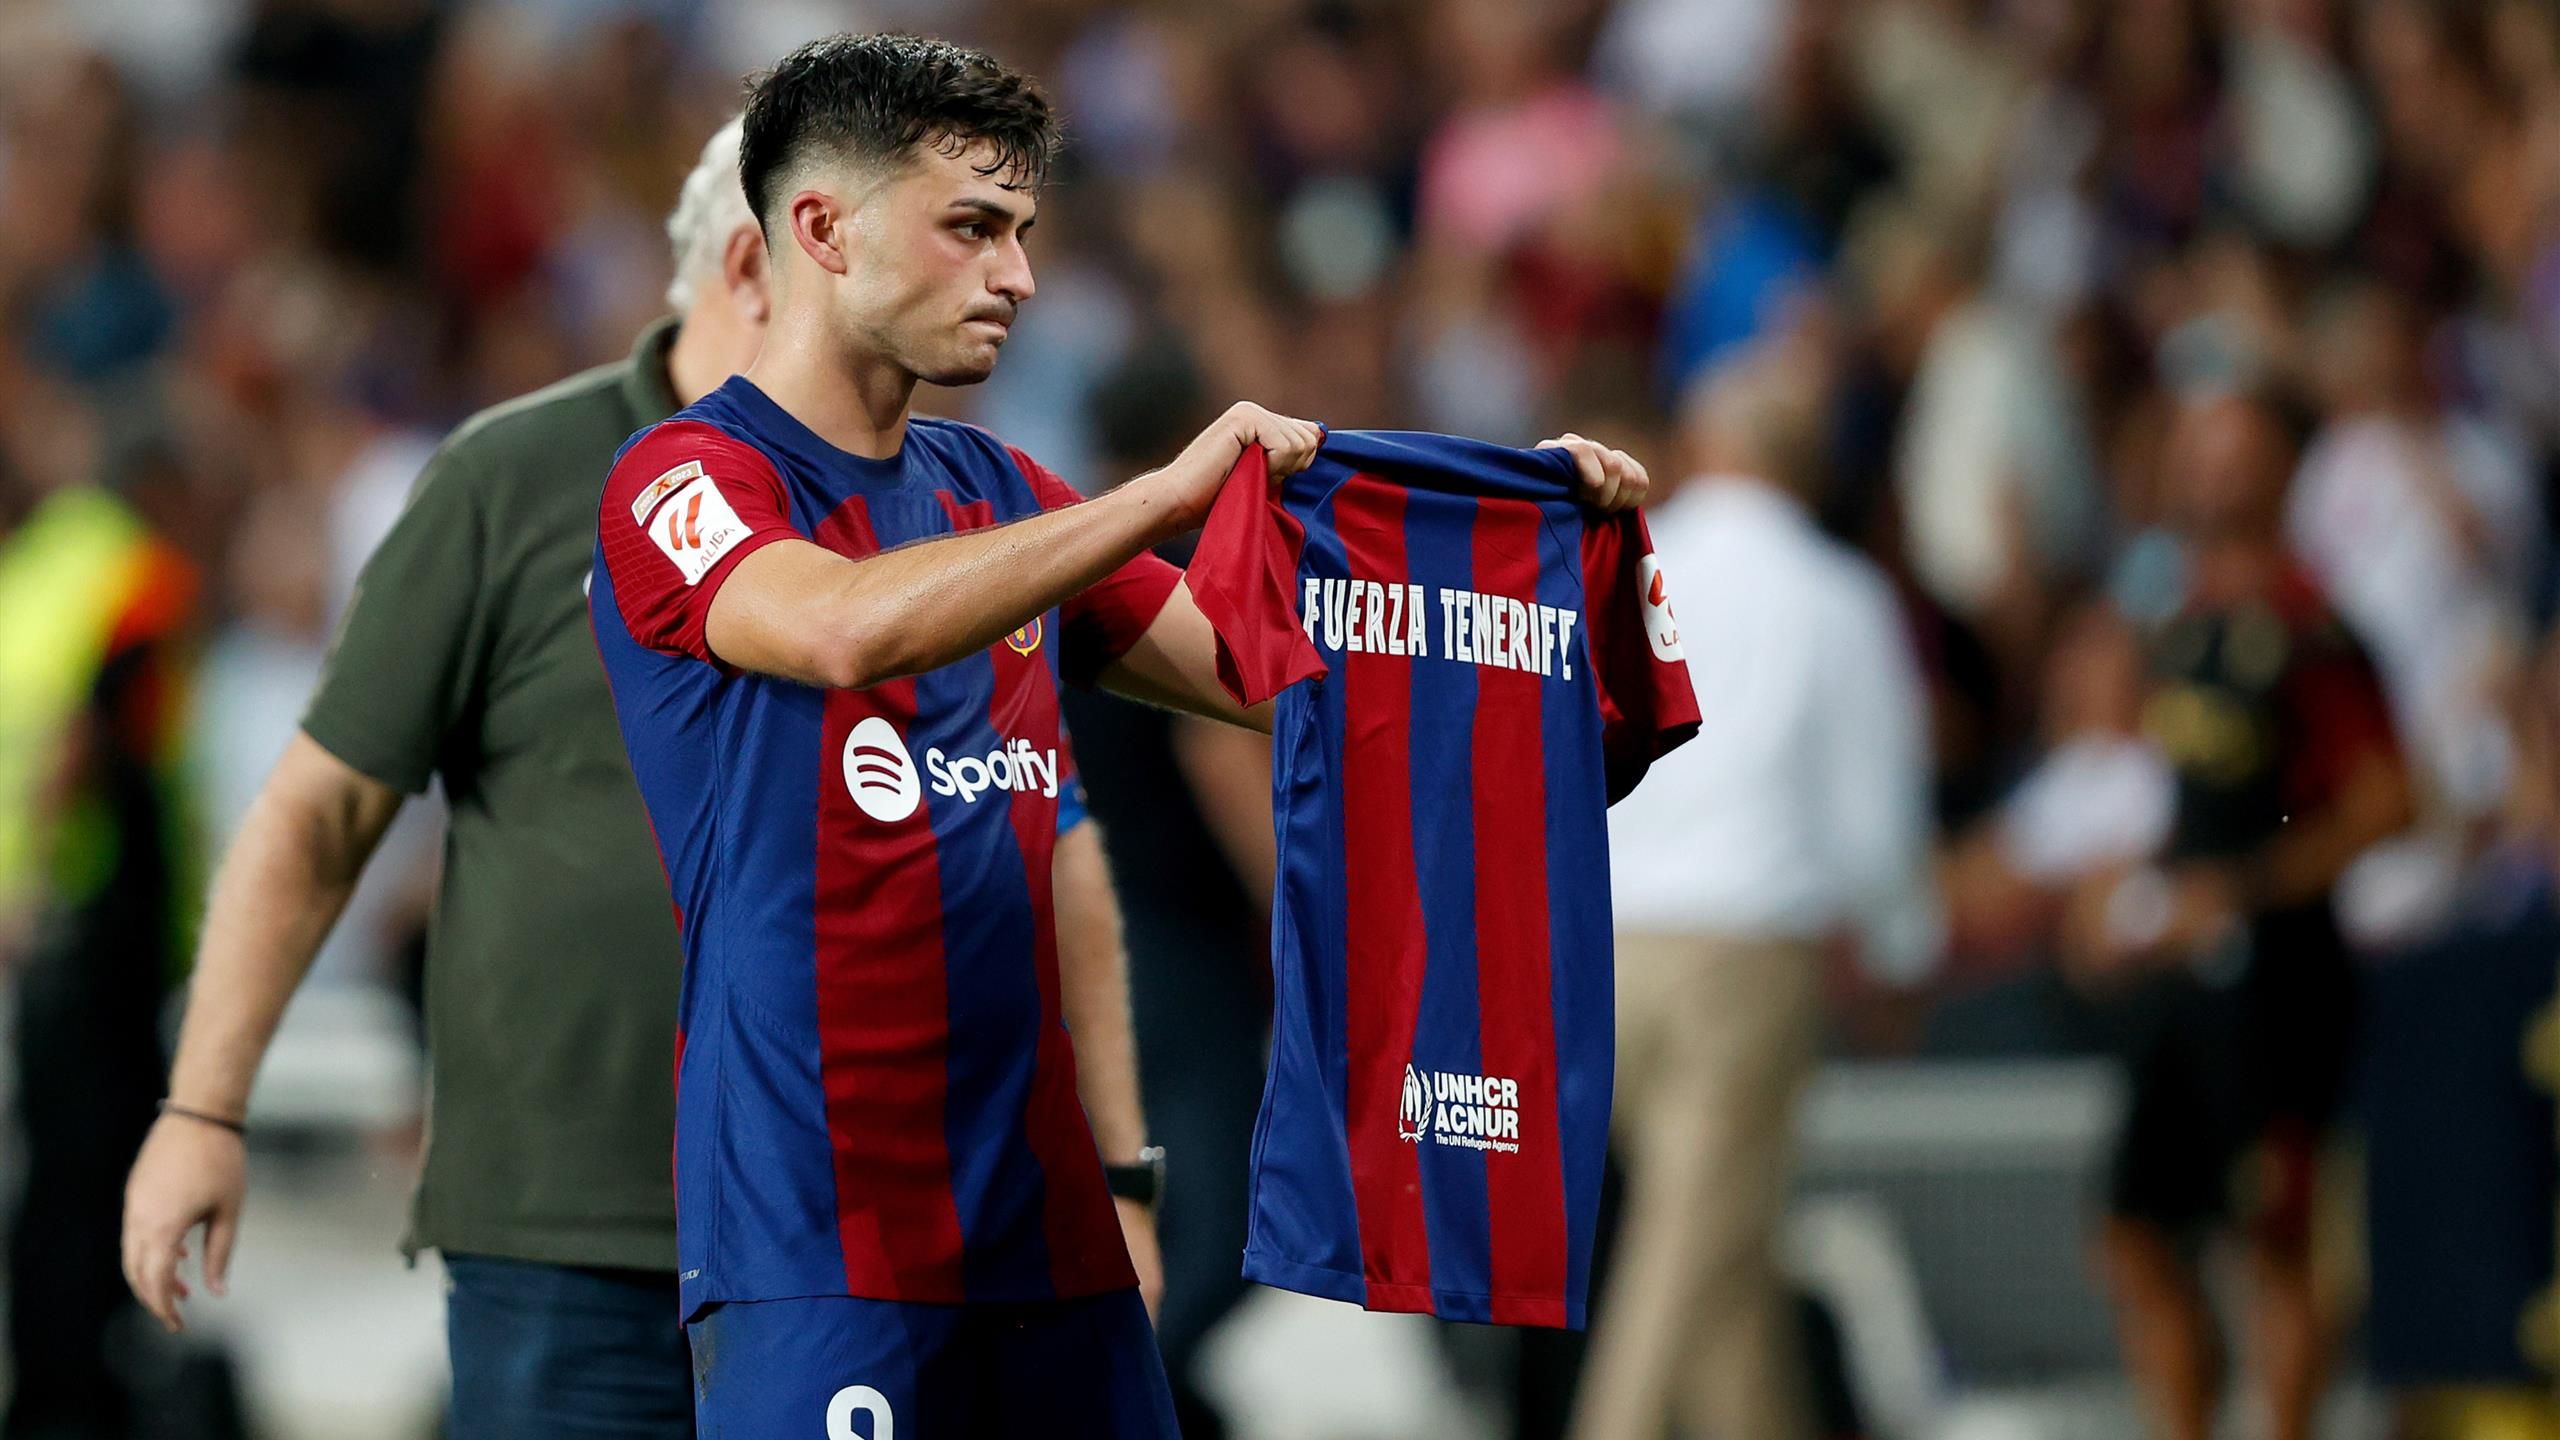 Barcelona-Cádiz  El emotivo detalle de Pedri en la celebración de su gol:  Fuerza Tenerife - Eurosport